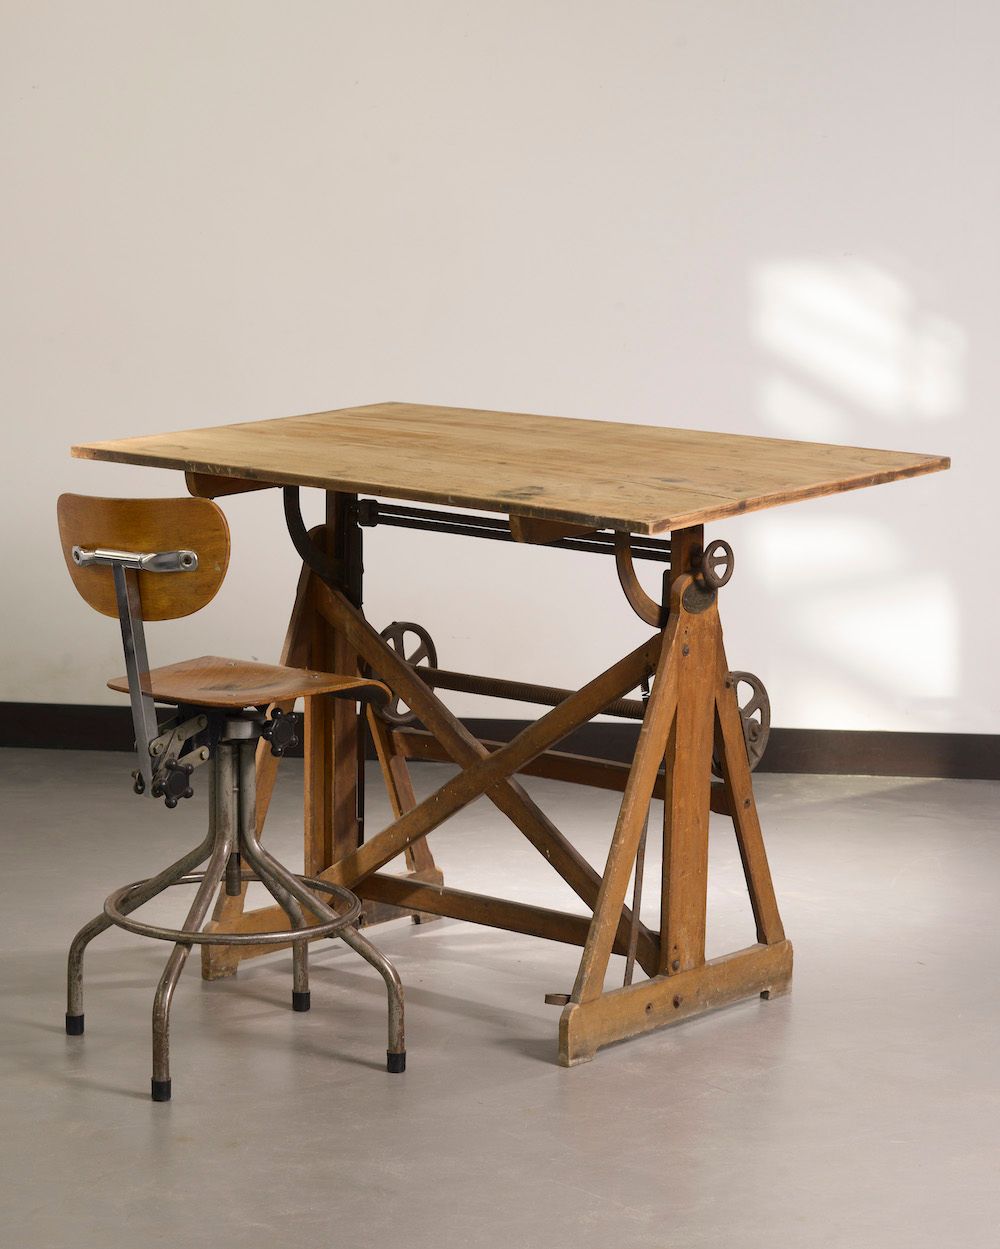 Null 建筑师的桌子，长方形的倾斜桌面为天然木材，底座为栈桥形式（小裂缝，小污点）。

高度：90厘米90厘米 - 宽度：120厘米 - 深度：80厘米